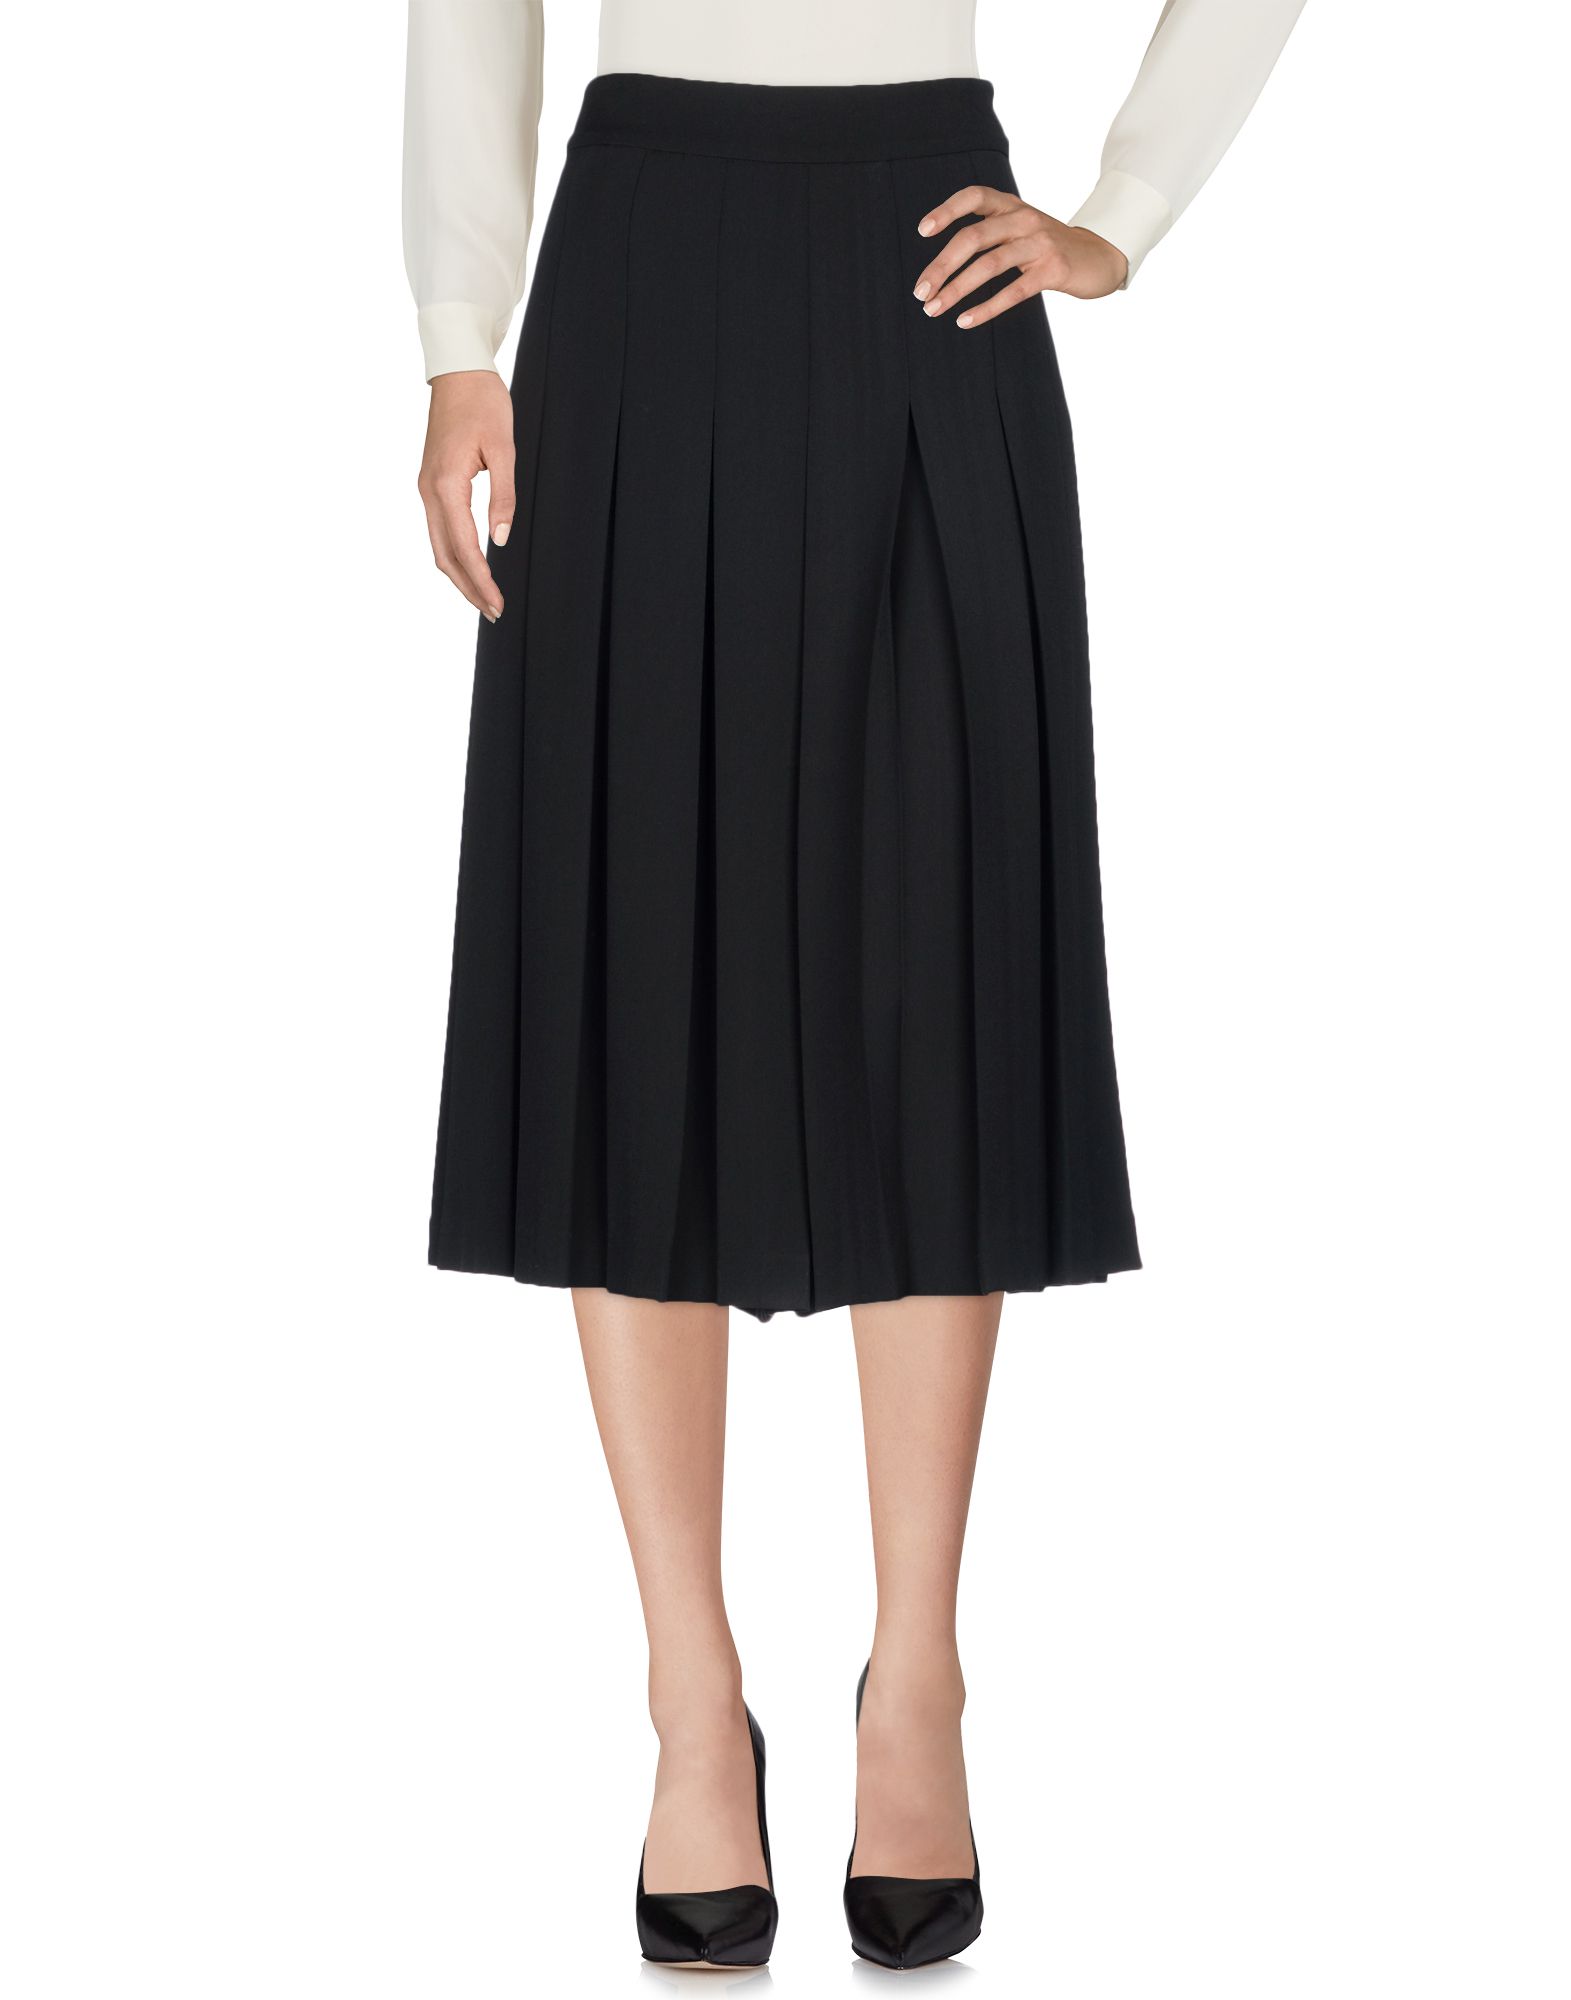 GREY JASON WU Midi Skirts,13206208HD 4